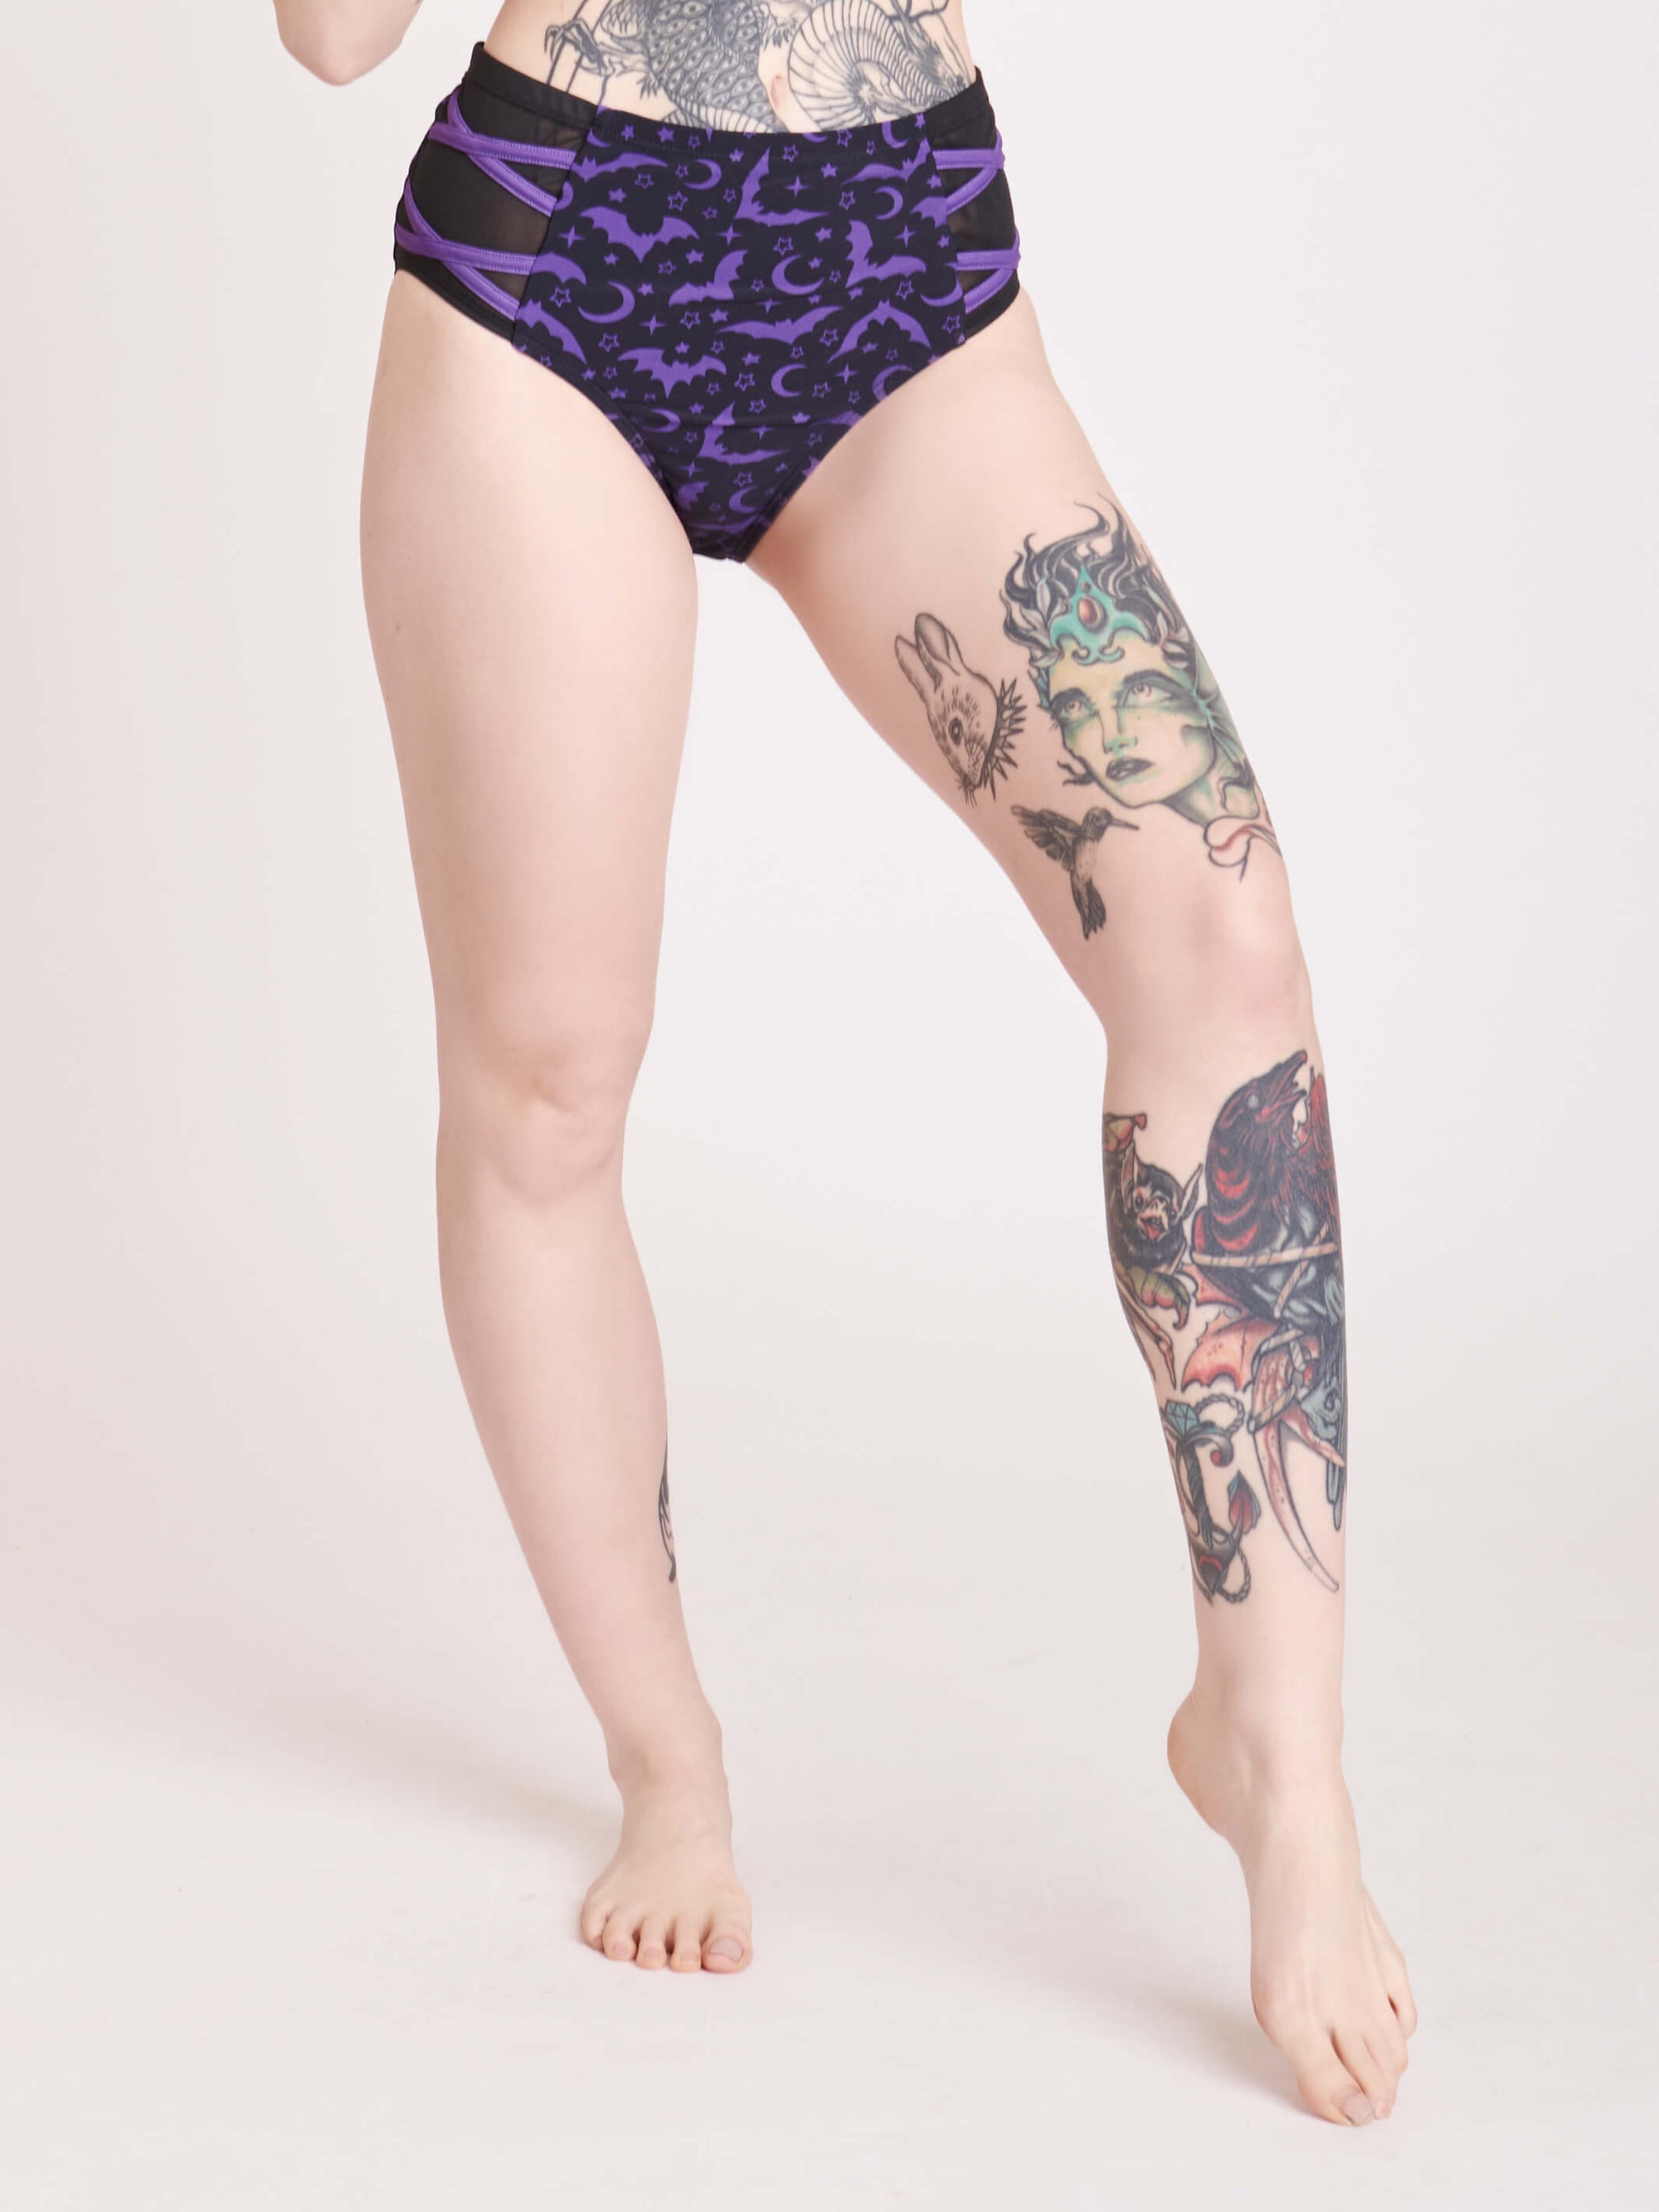 Black and purple bat print bikini bottoms with mesh side panell detail